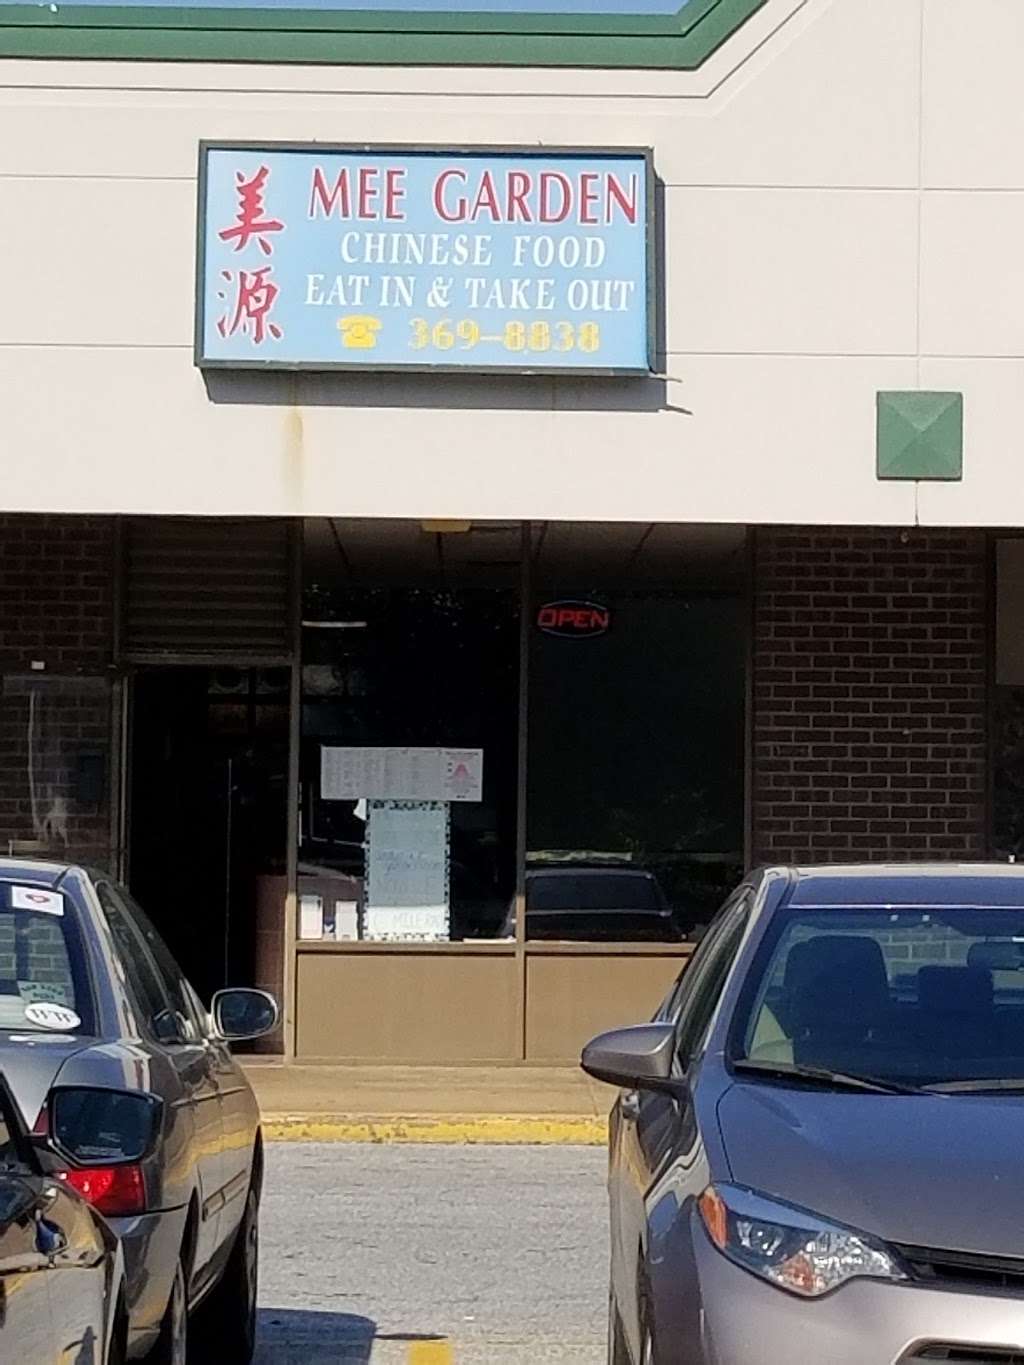 Mee Garden - Authentic Asian Cuisine in Newark | 13 Polly Drummond Shopping Center, Newark, DE 19711 | Phone: (302) 369-3900